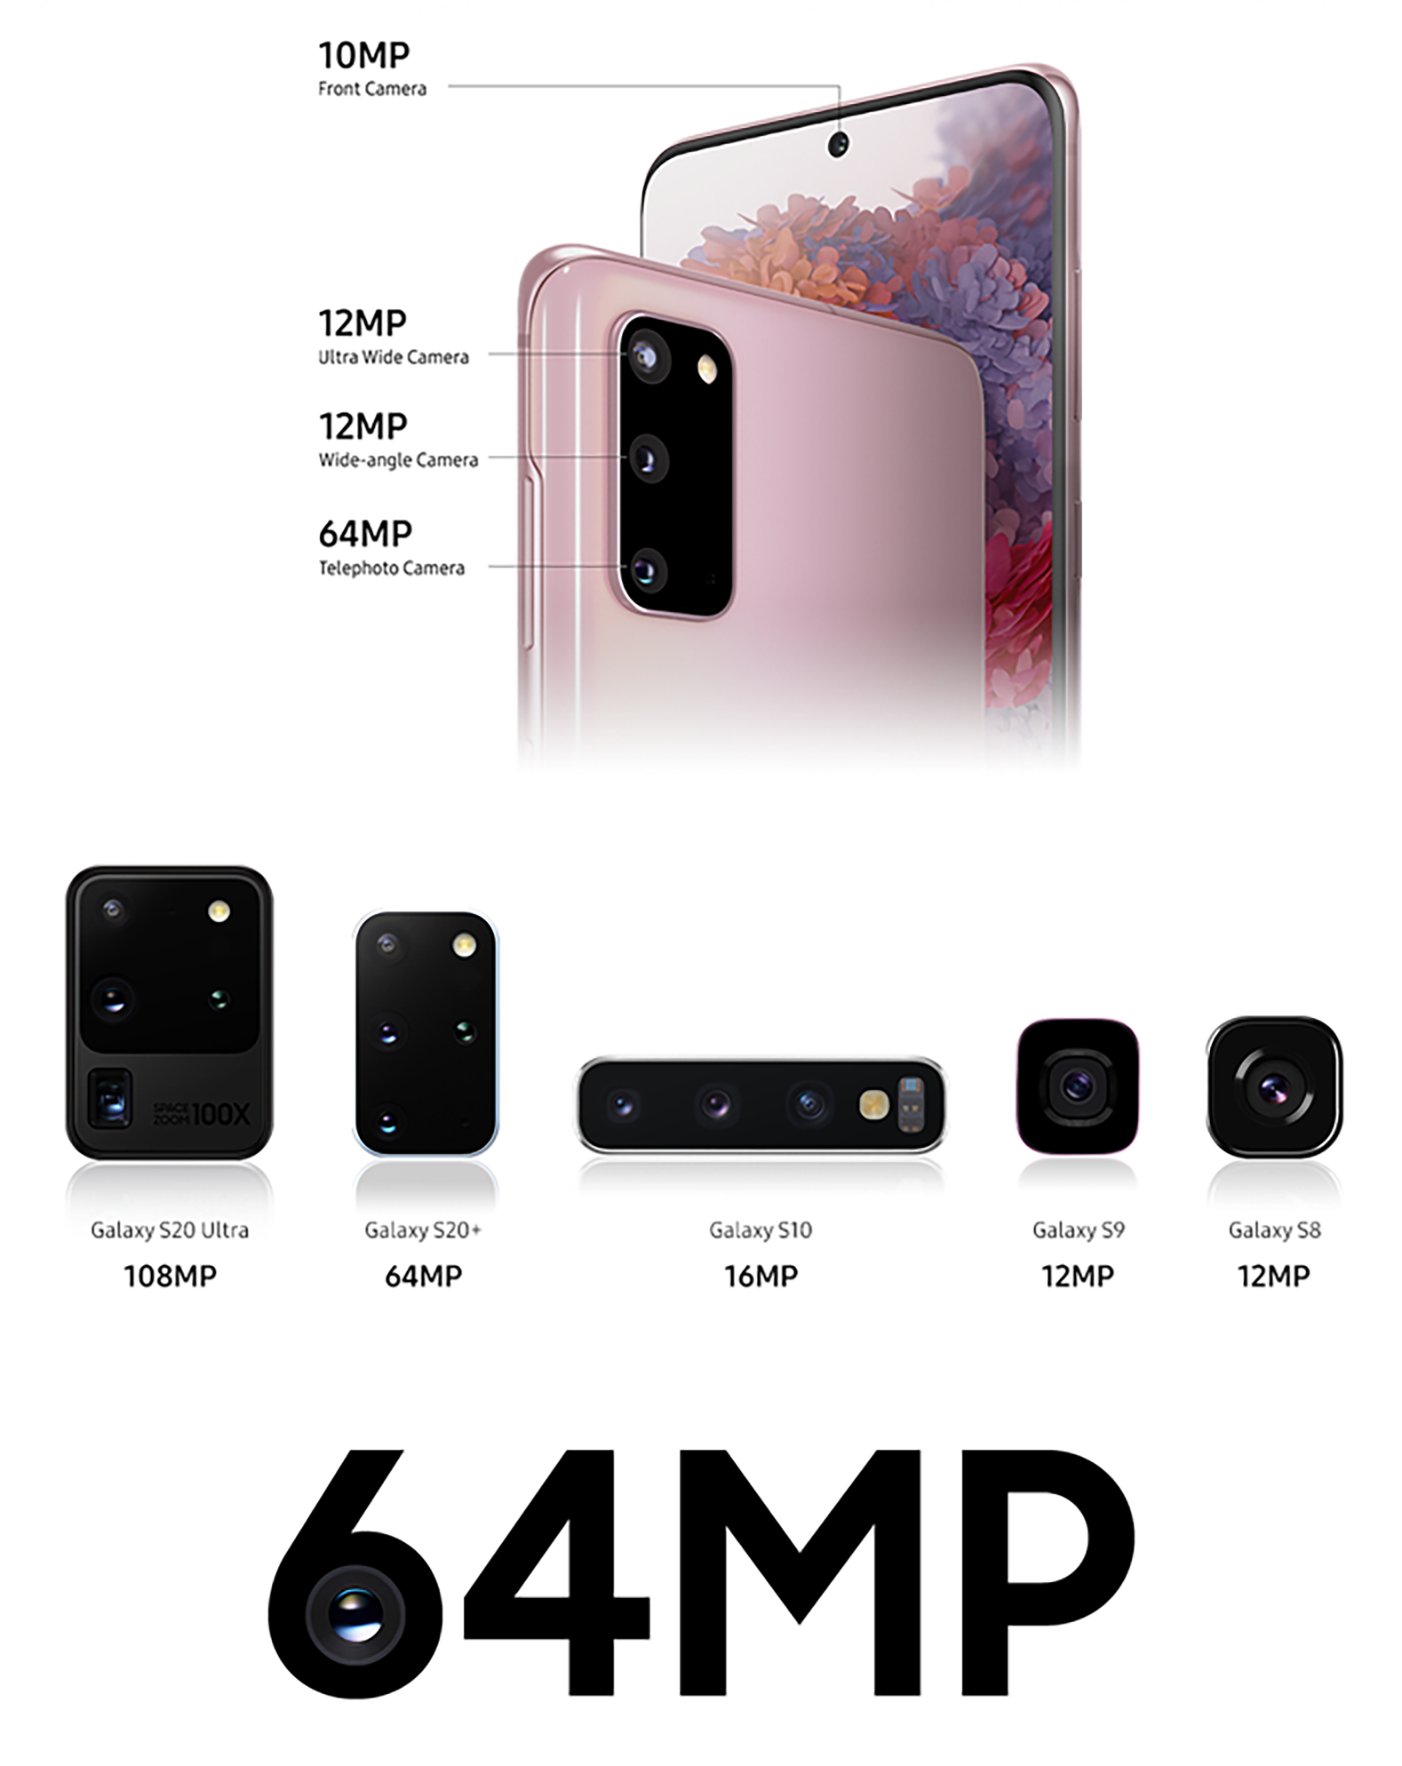 Samsung Galaxy S20 Cameras Line Up